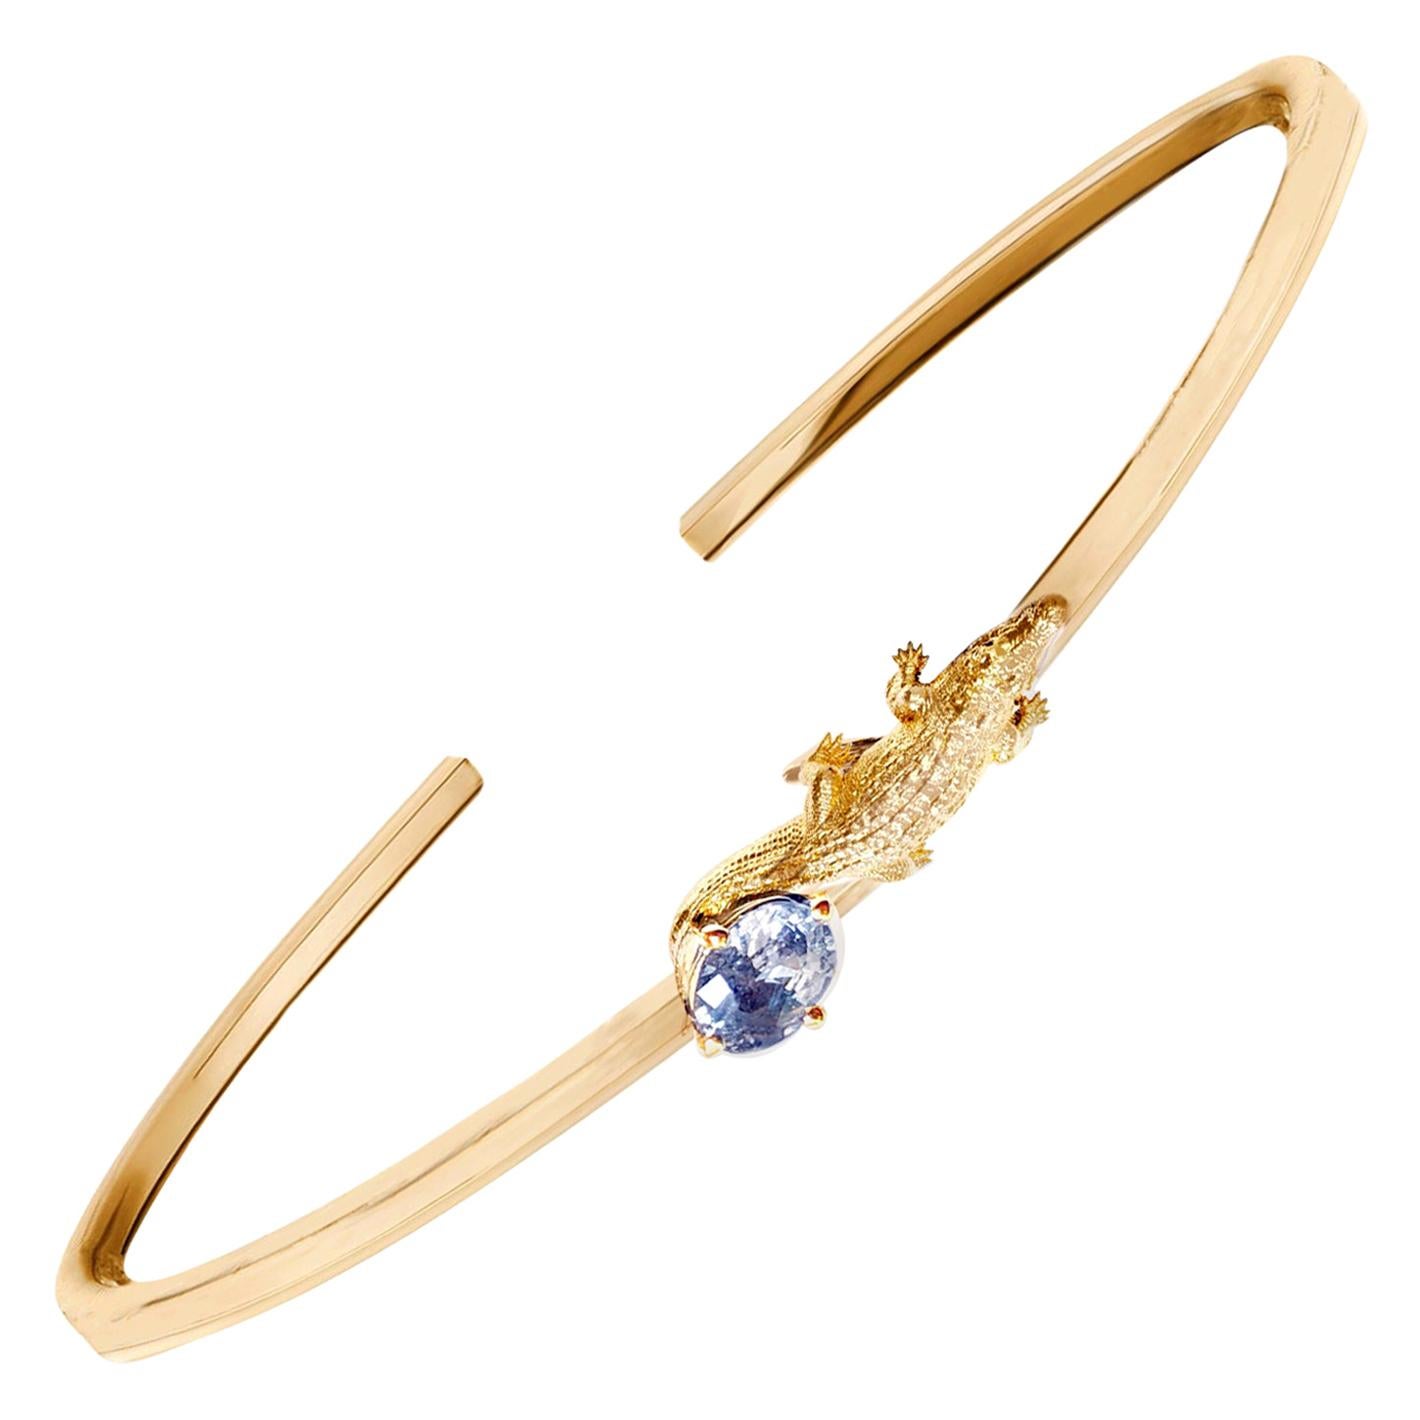 18 Karat Yellow Gold Mesopotamian Bracelet with 0.65 Carats Light Blue Sapphire